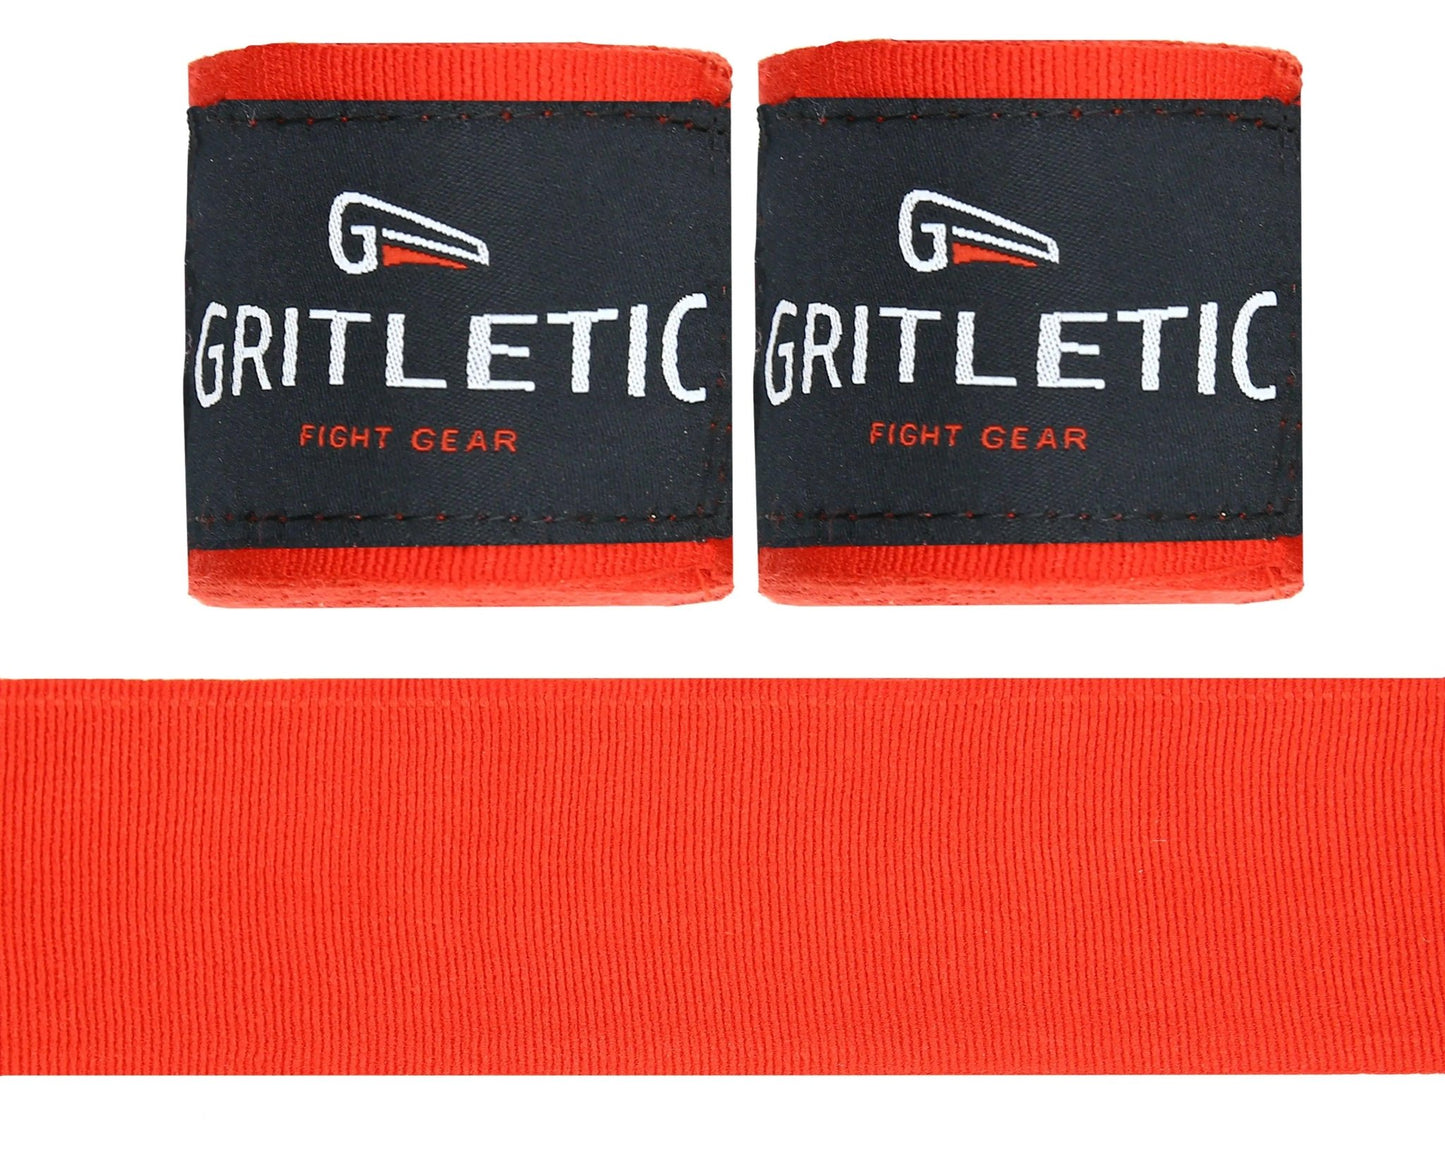 Gritletic x RVCA Boxing Hand Wraps, Red Wrist Wraps - Gritleticstore